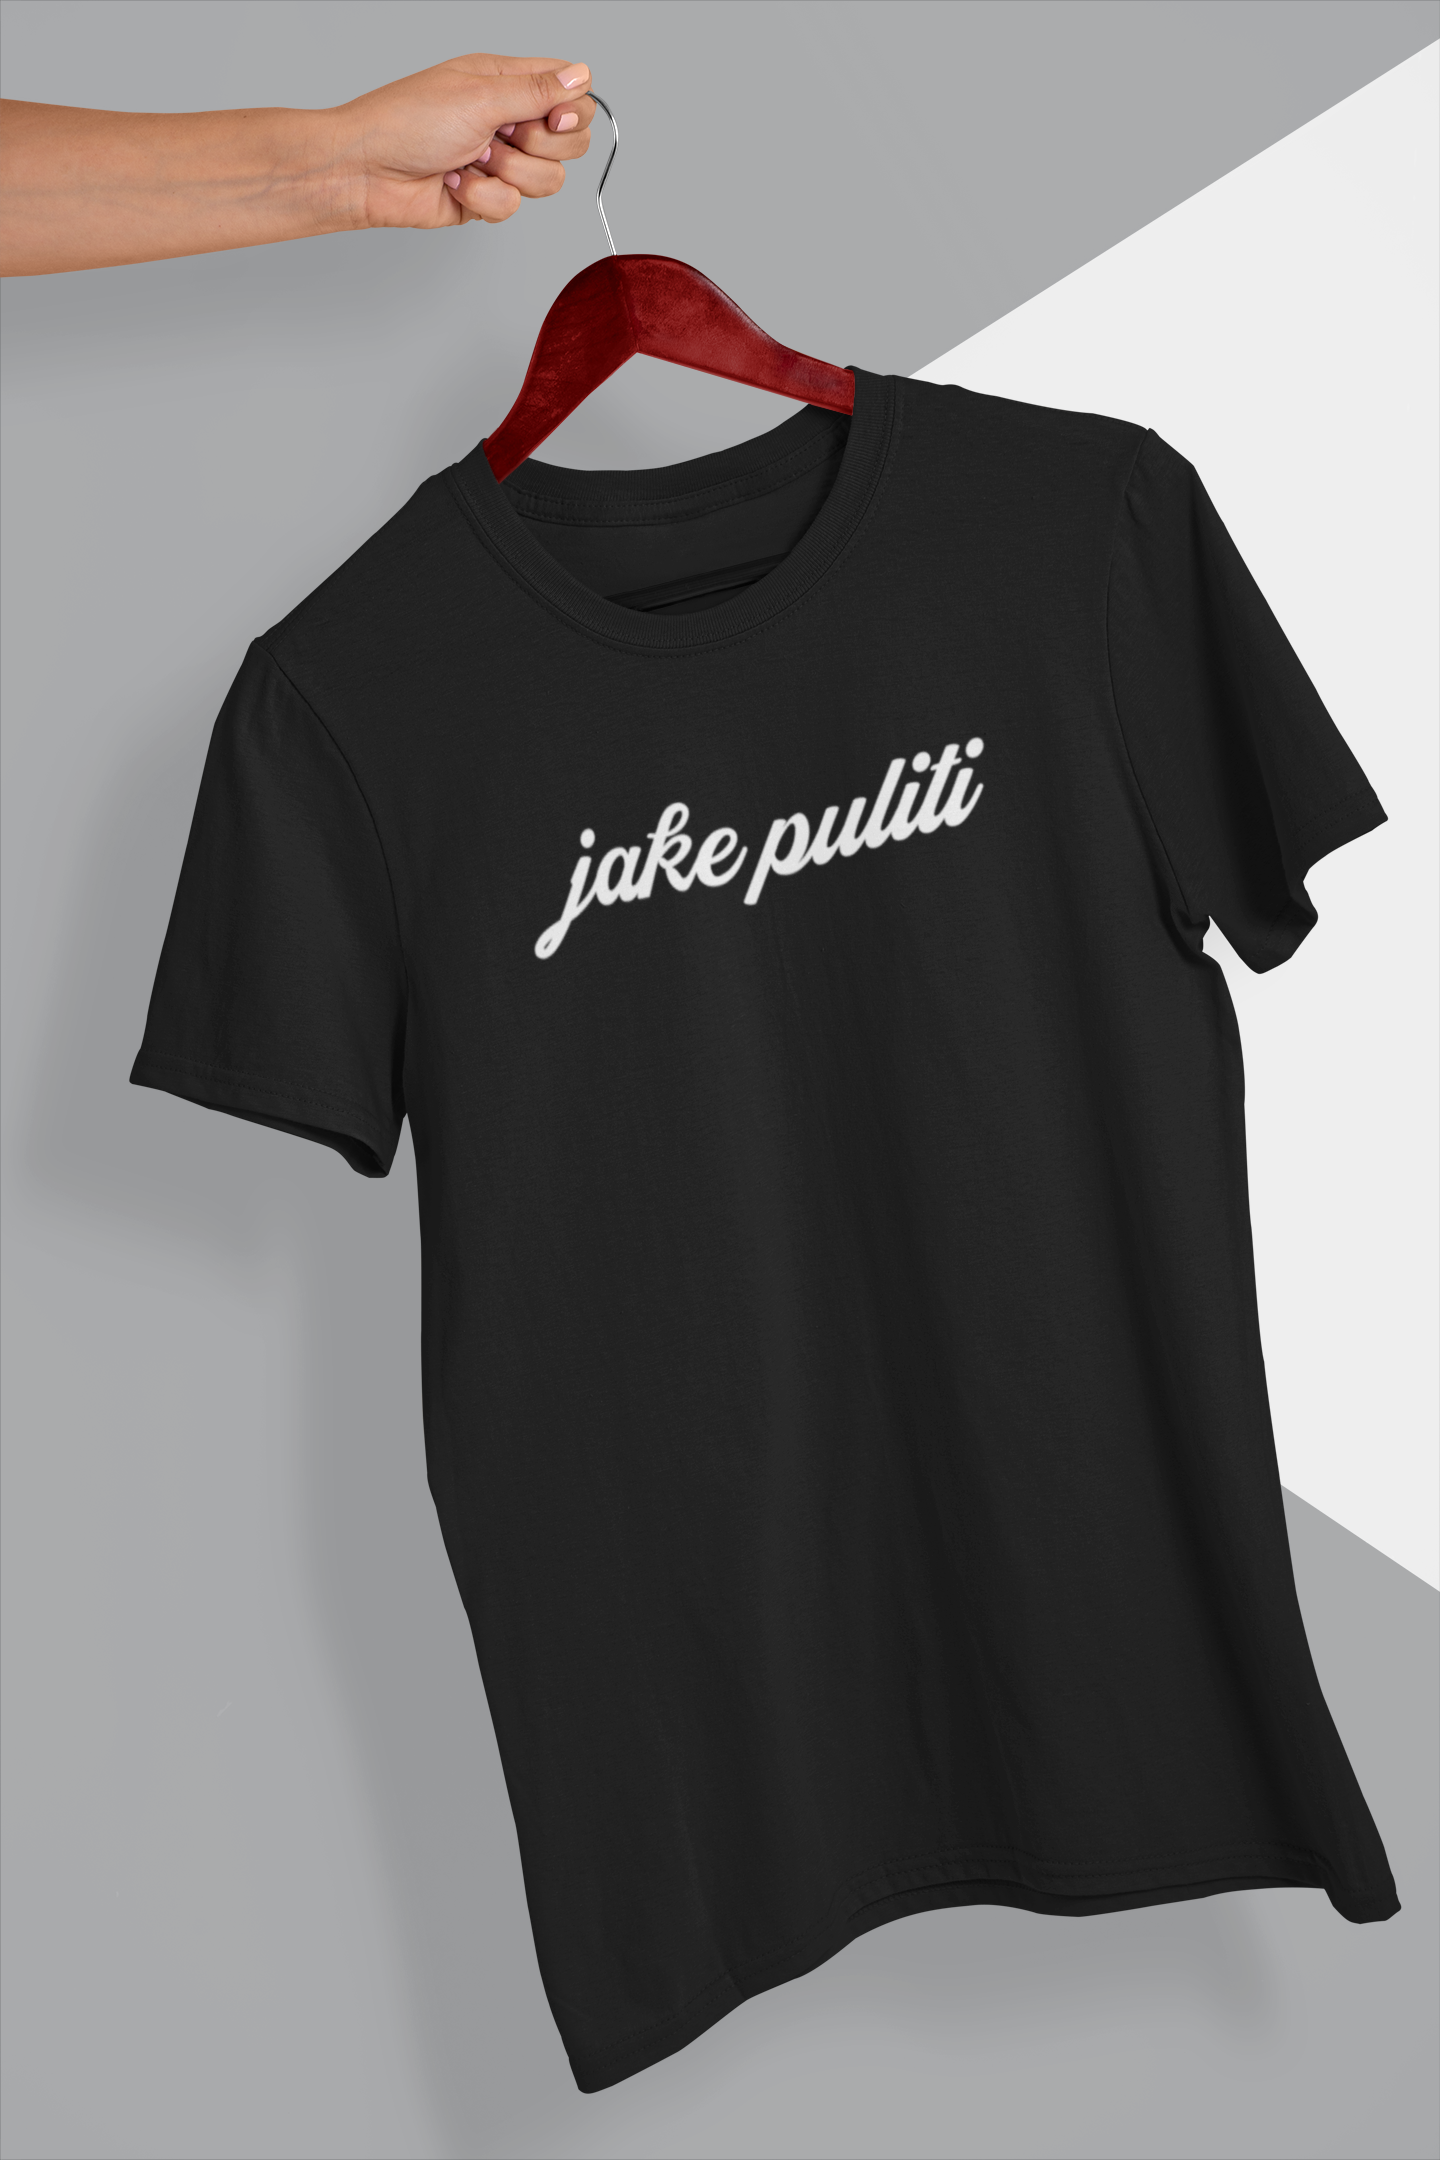 Jake Puliti's Classic T-Shirt